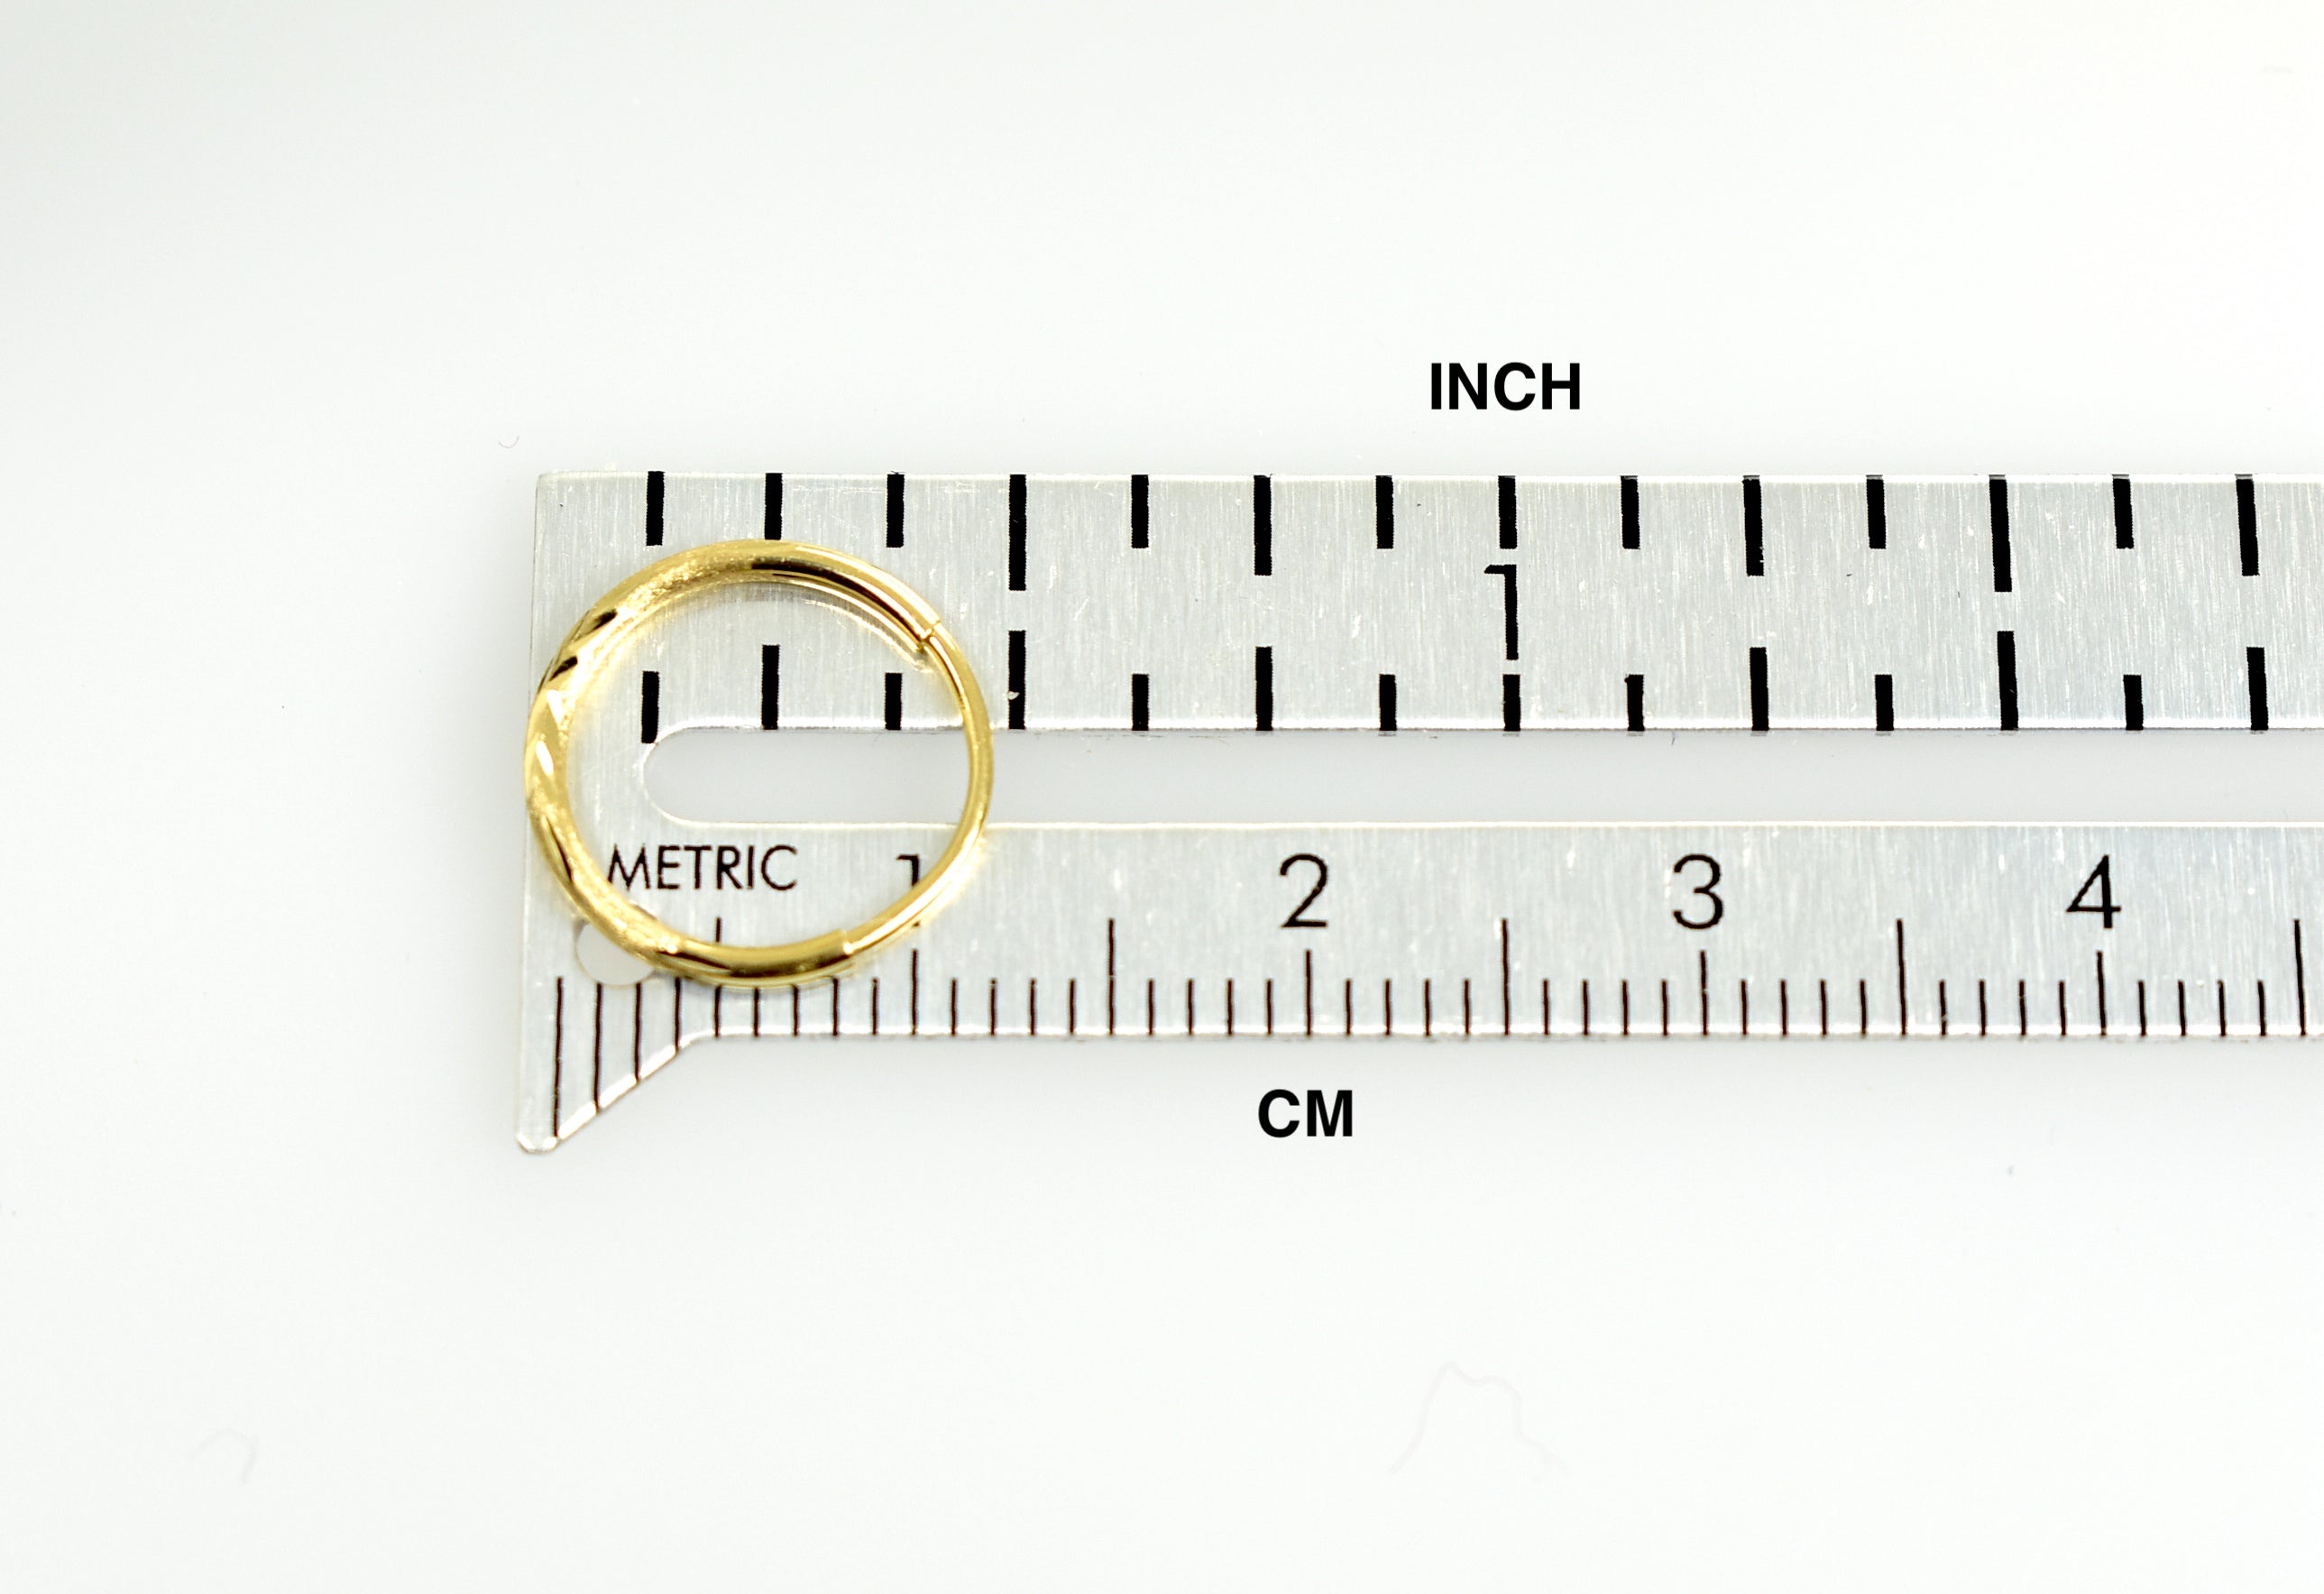 14k Yellow Gold Diamond Cut Satin Endless Round Hoop Earrings 13mm x 1.25mm